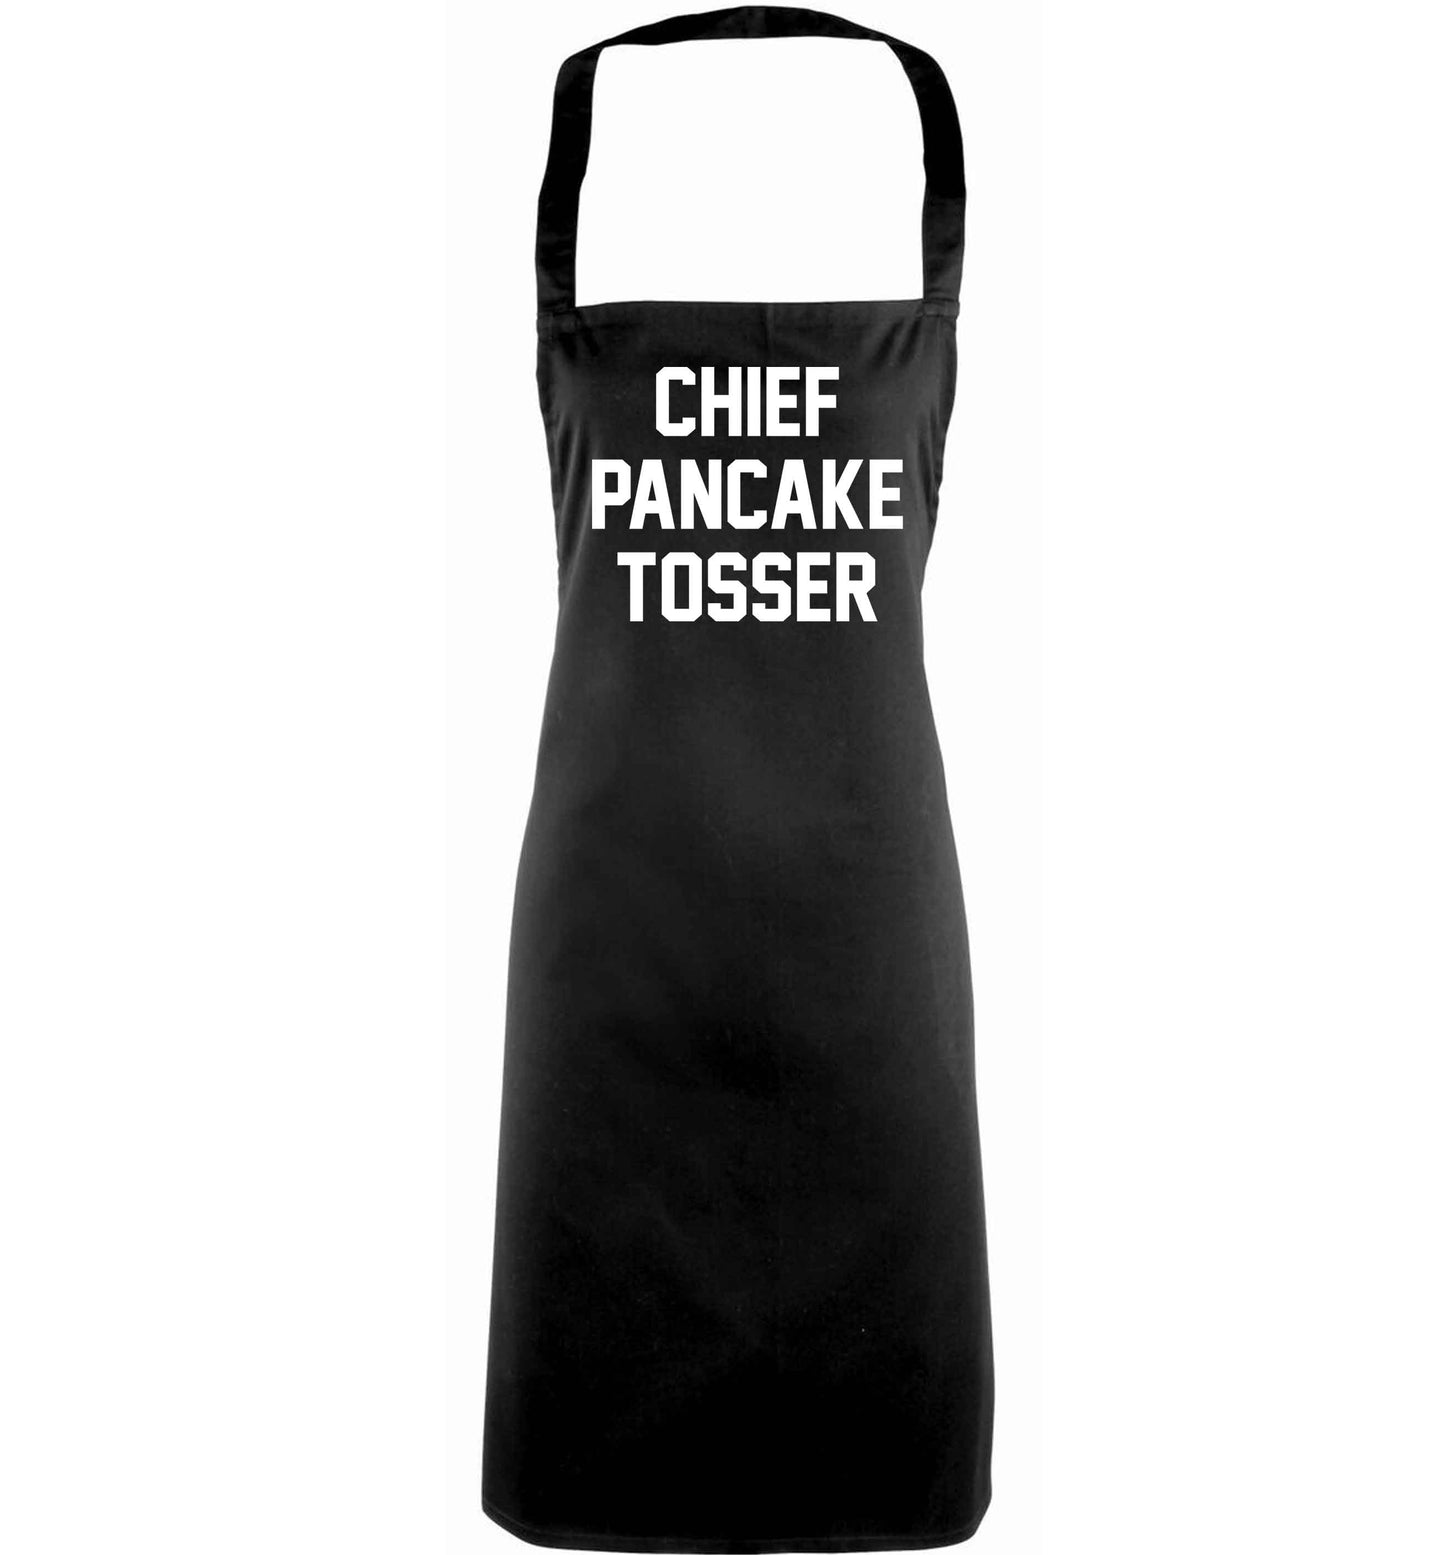 Chief pancake tosser adults black apron